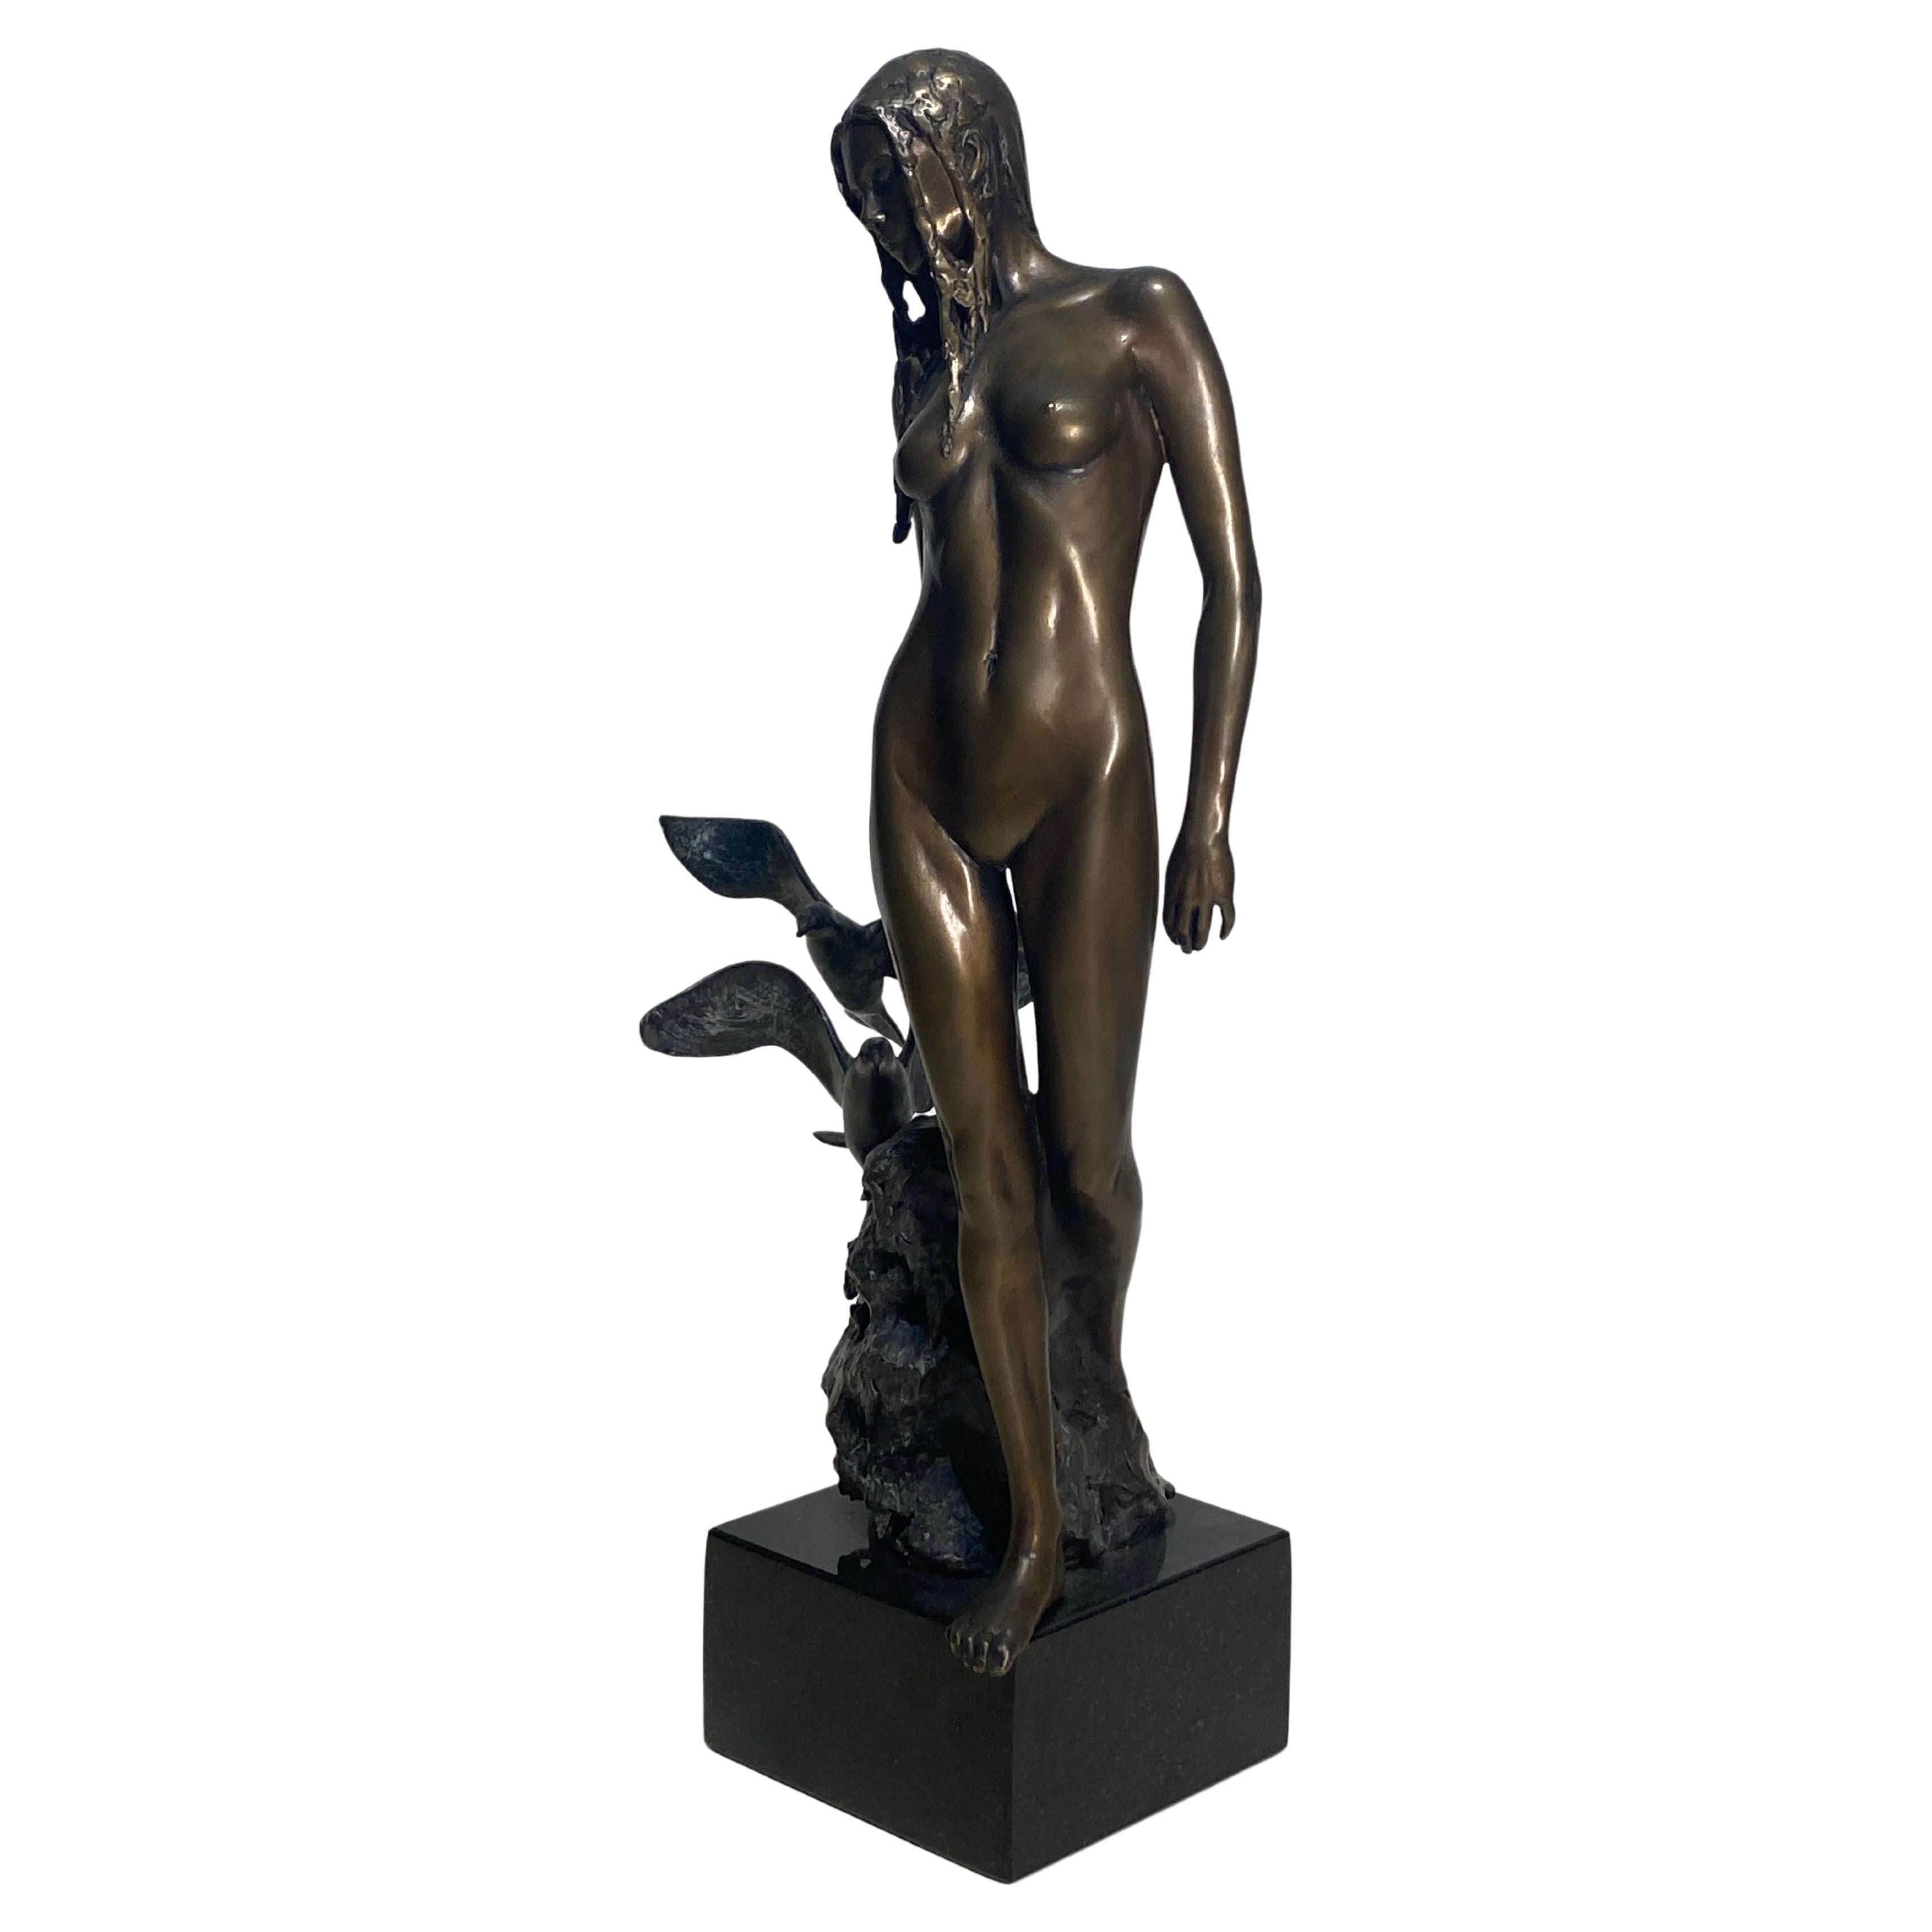 Neil Welch.  
Une grande sculpture en bronze intitulée 